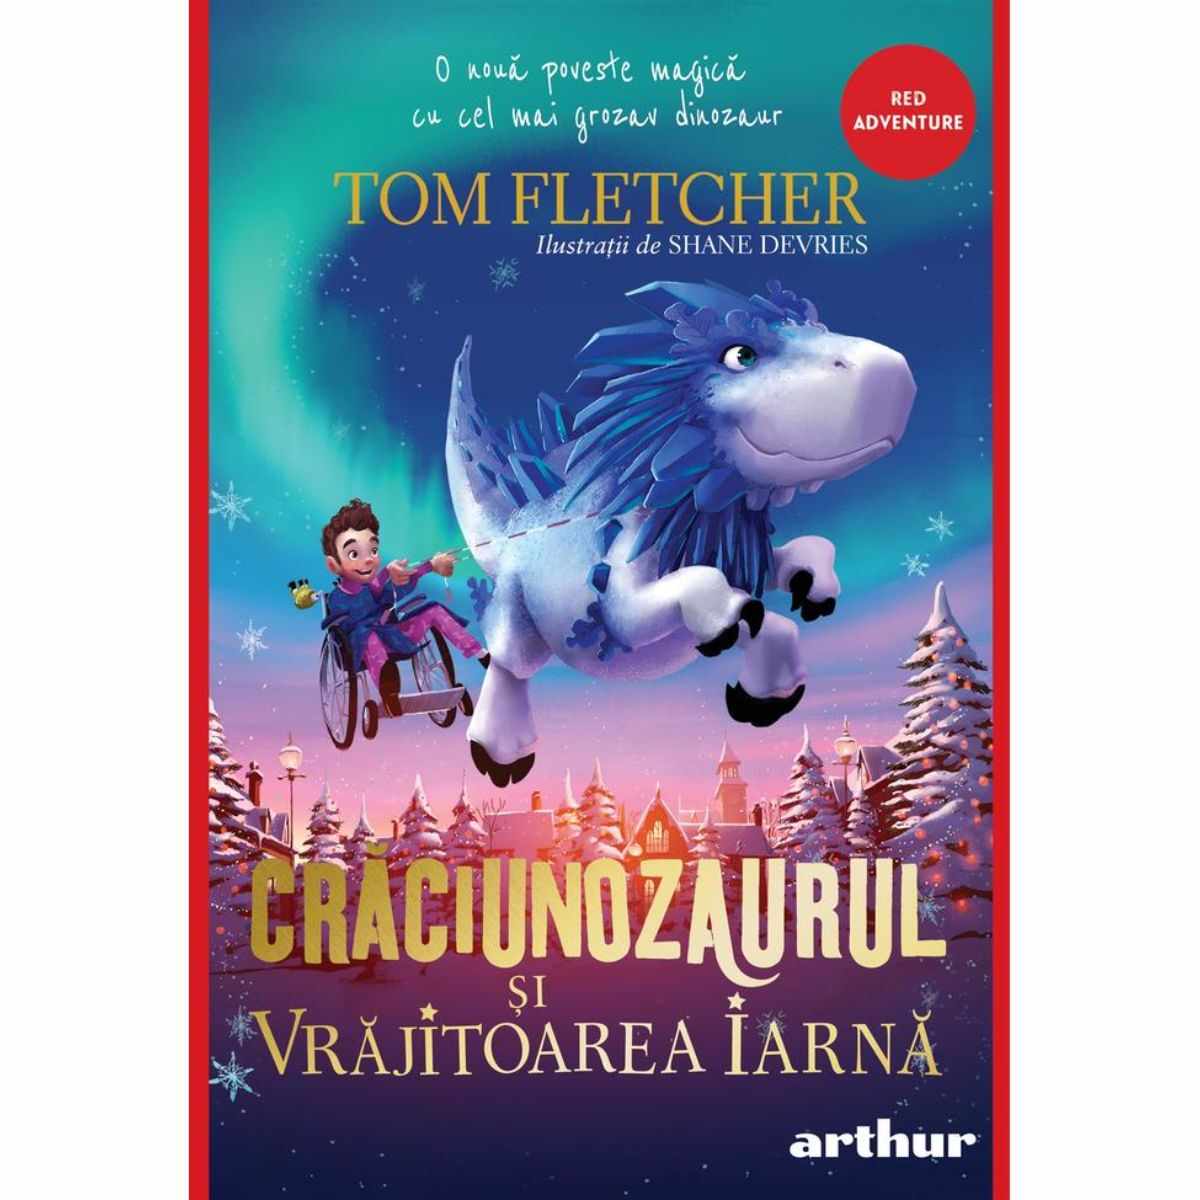 Craciunozaurul si vrajitoarea iarna, Tom Fletcher, Editura Art